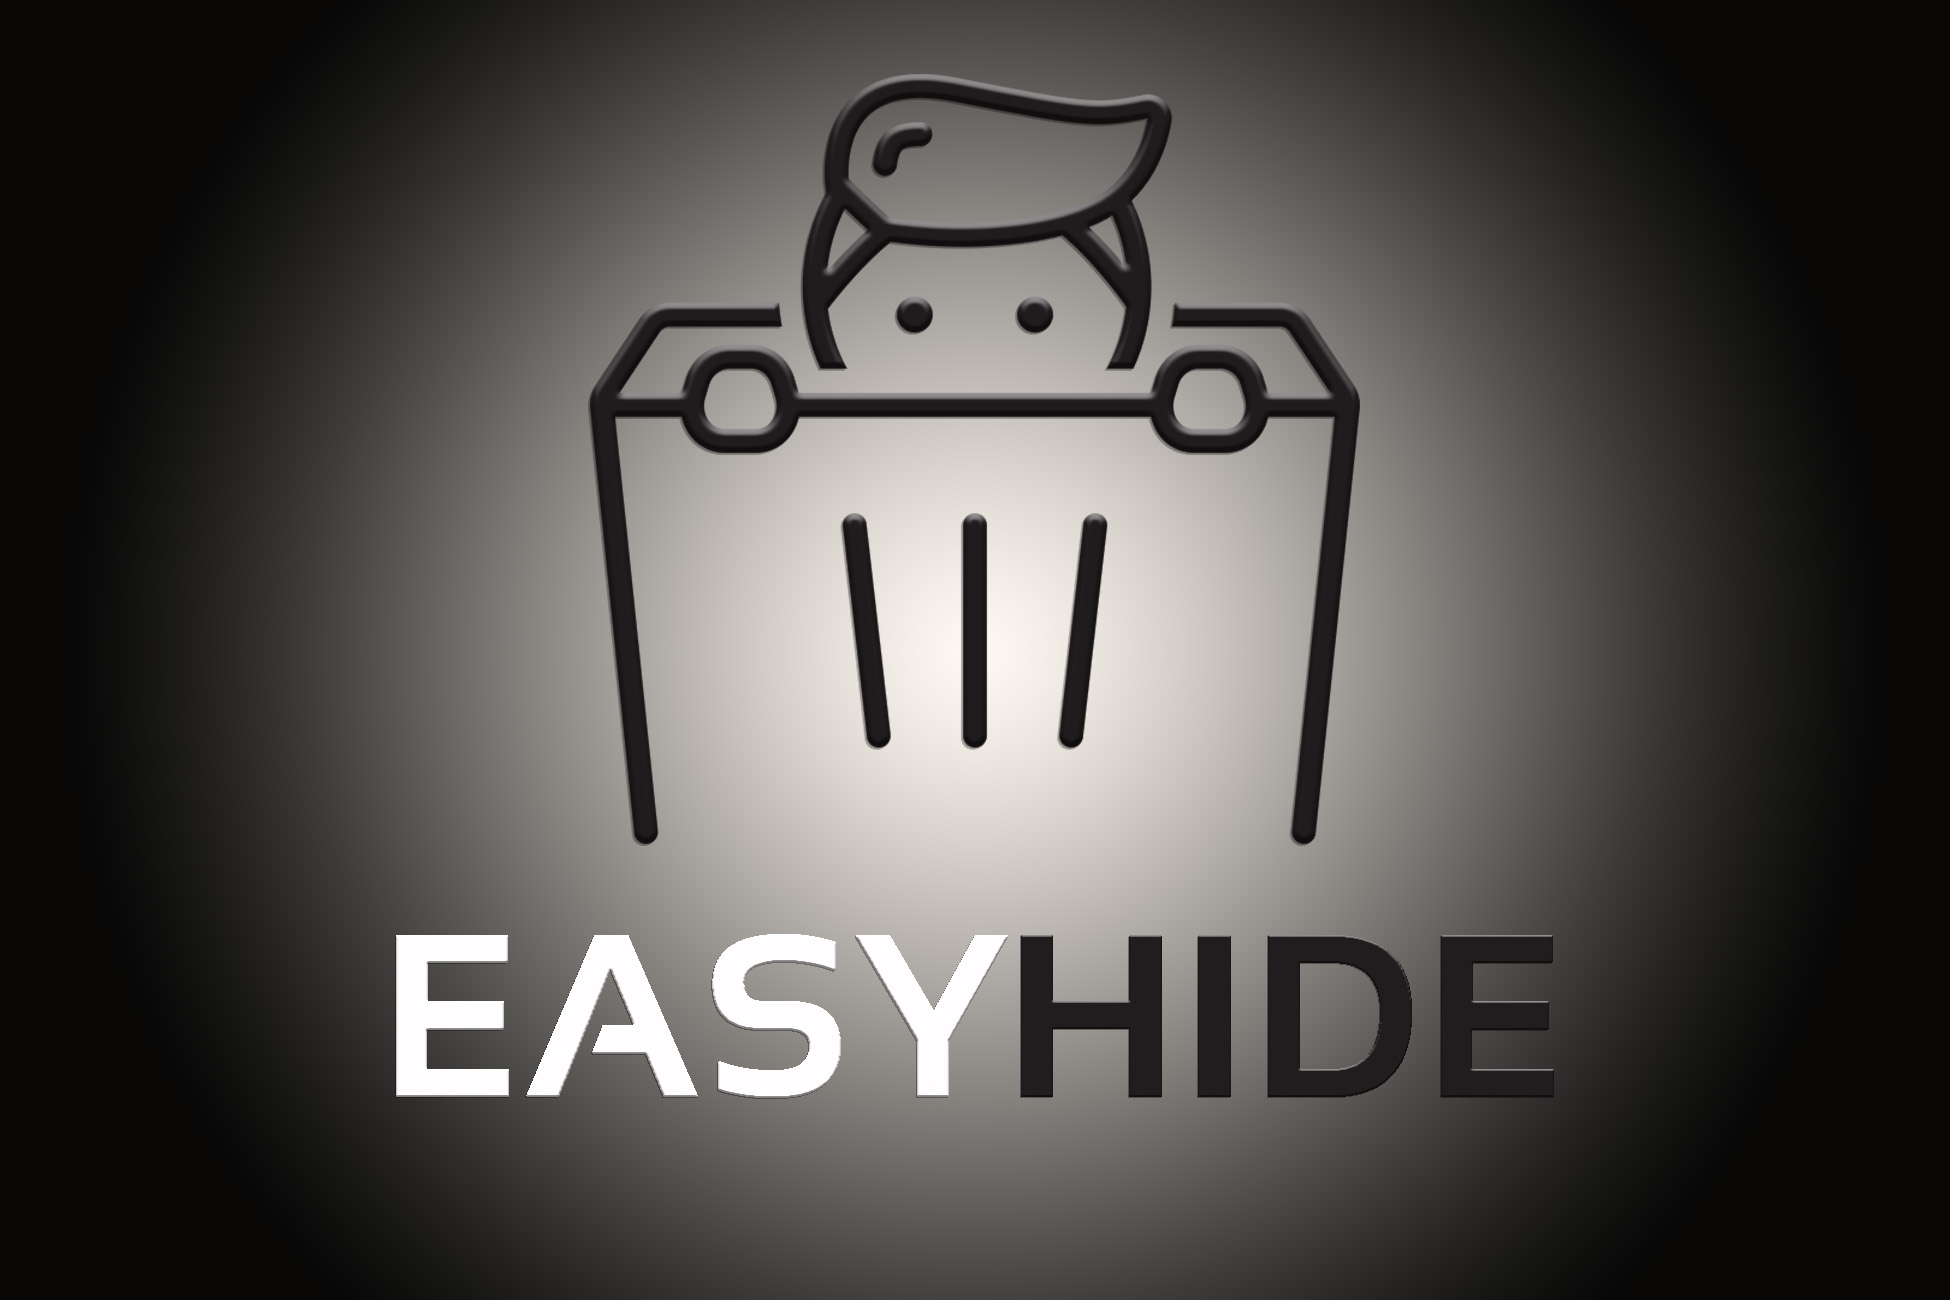 Easy Hide v0.6.2 Release